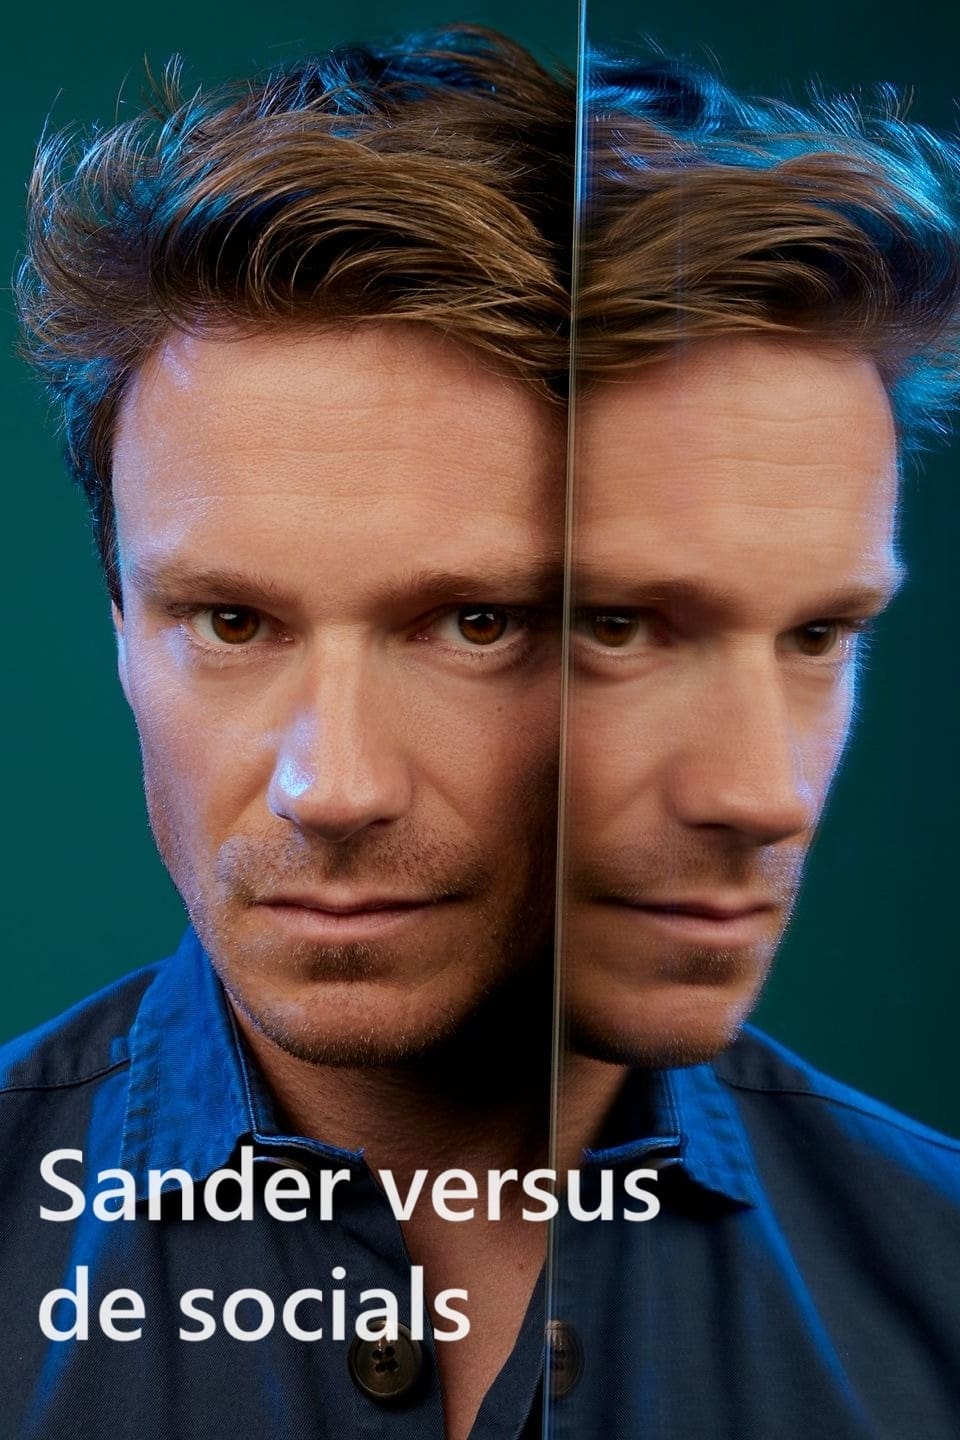 Sander versus the socials